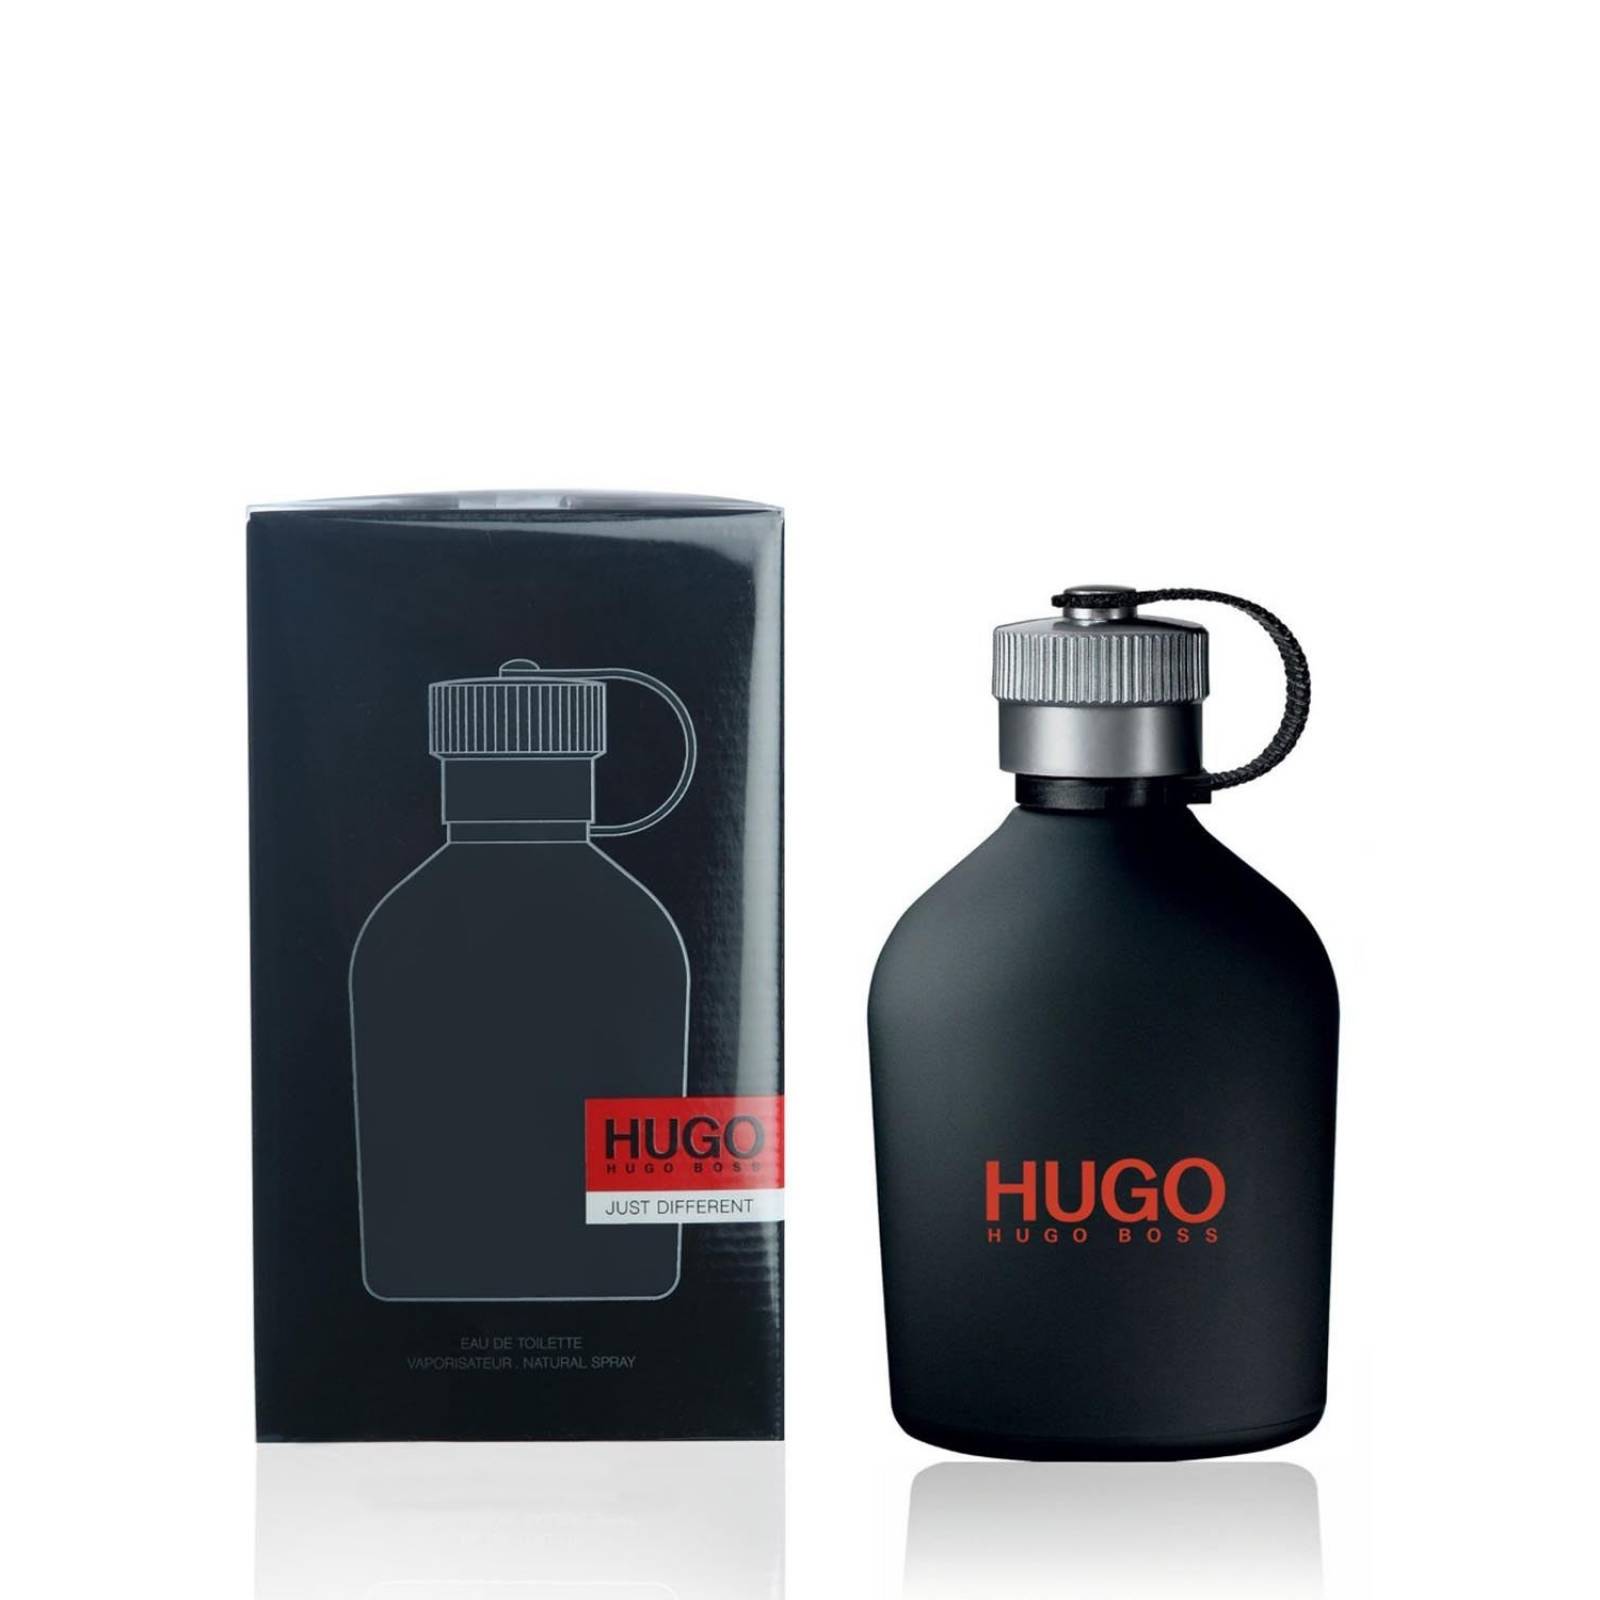 Hugo Just Different de Hugo Boss Eau de Toilette 125 ml Fragancia para Caballero